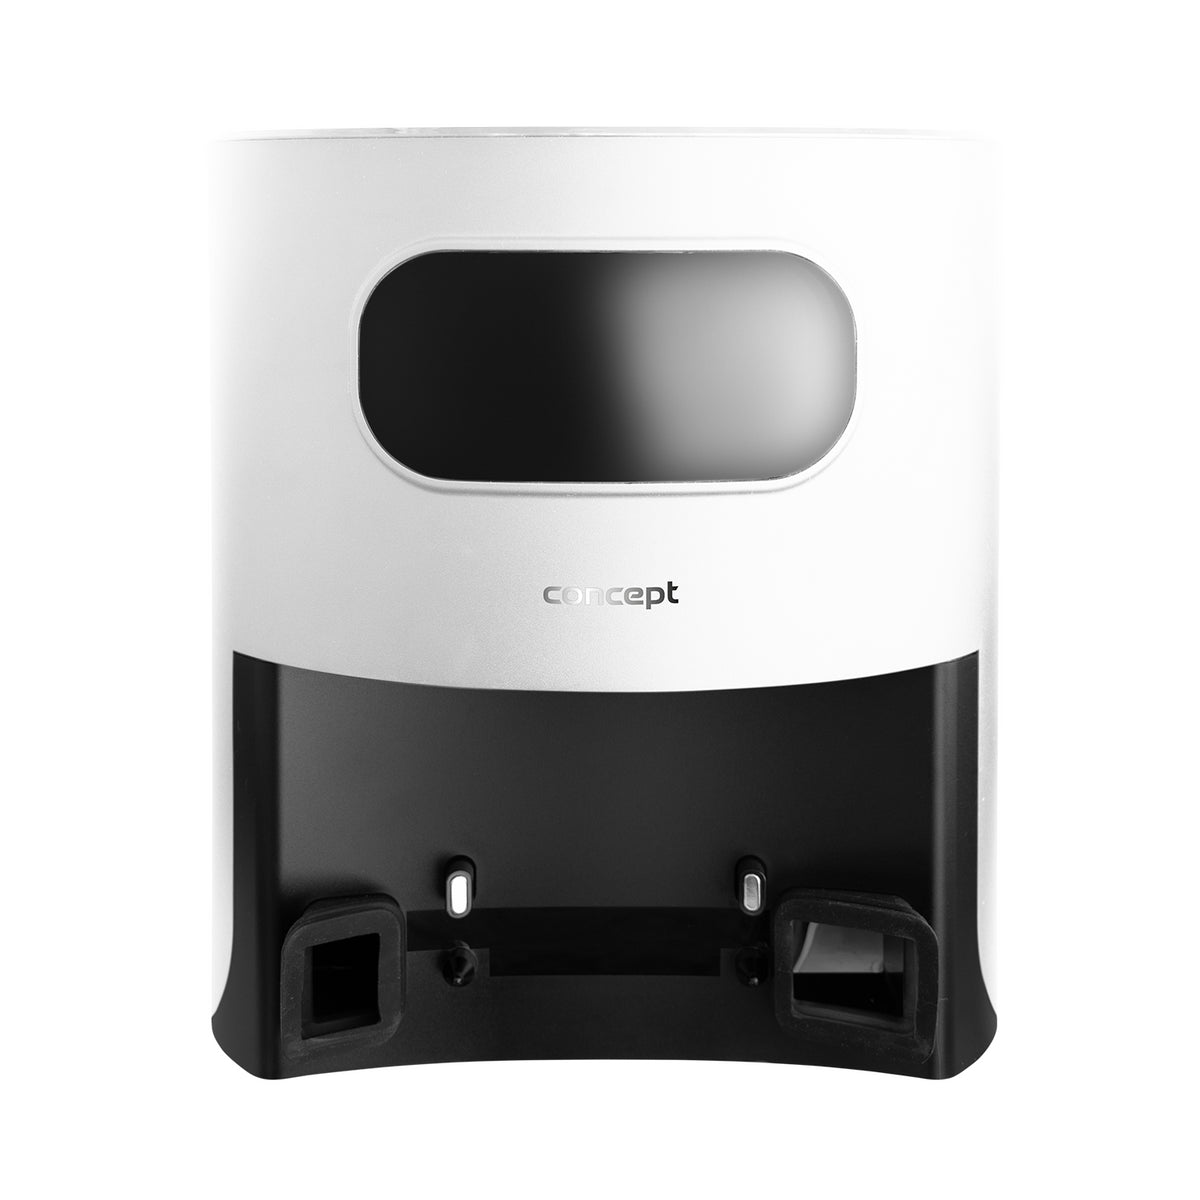 Robotický vysávač Concept Perfect Clean Laser VR3350, 2v1